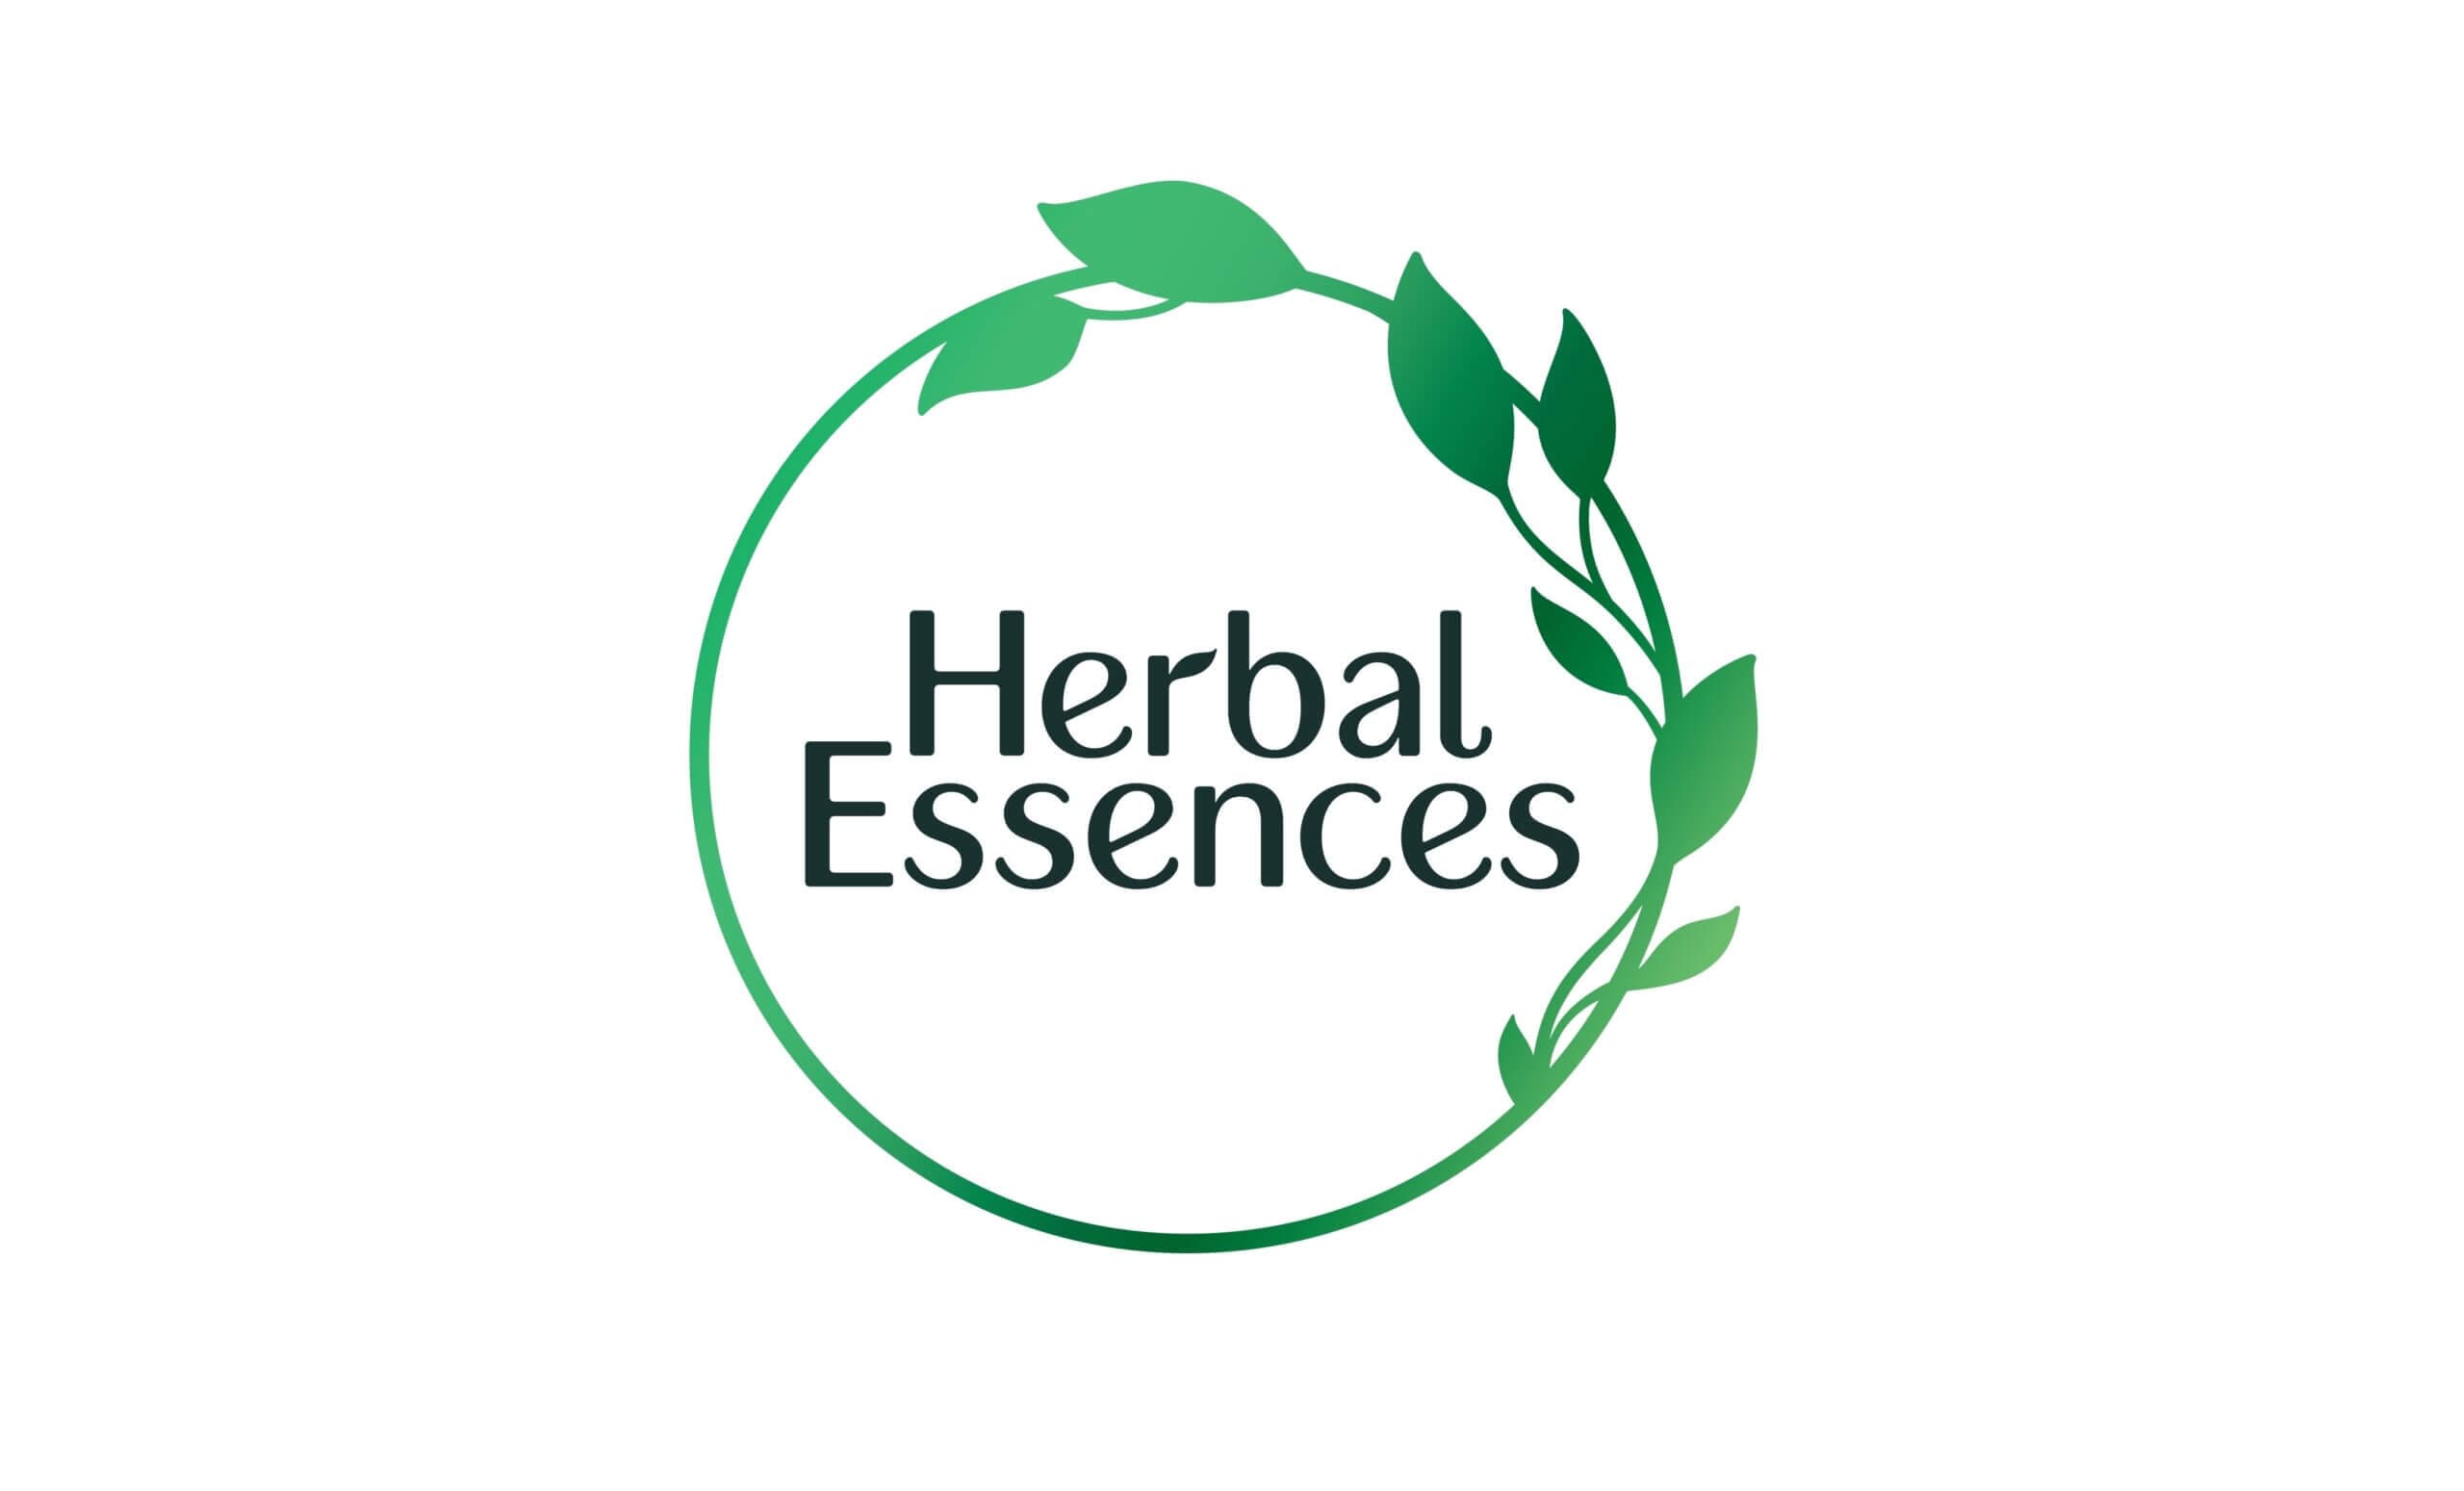 HerbalEssences- هيربال اسينس